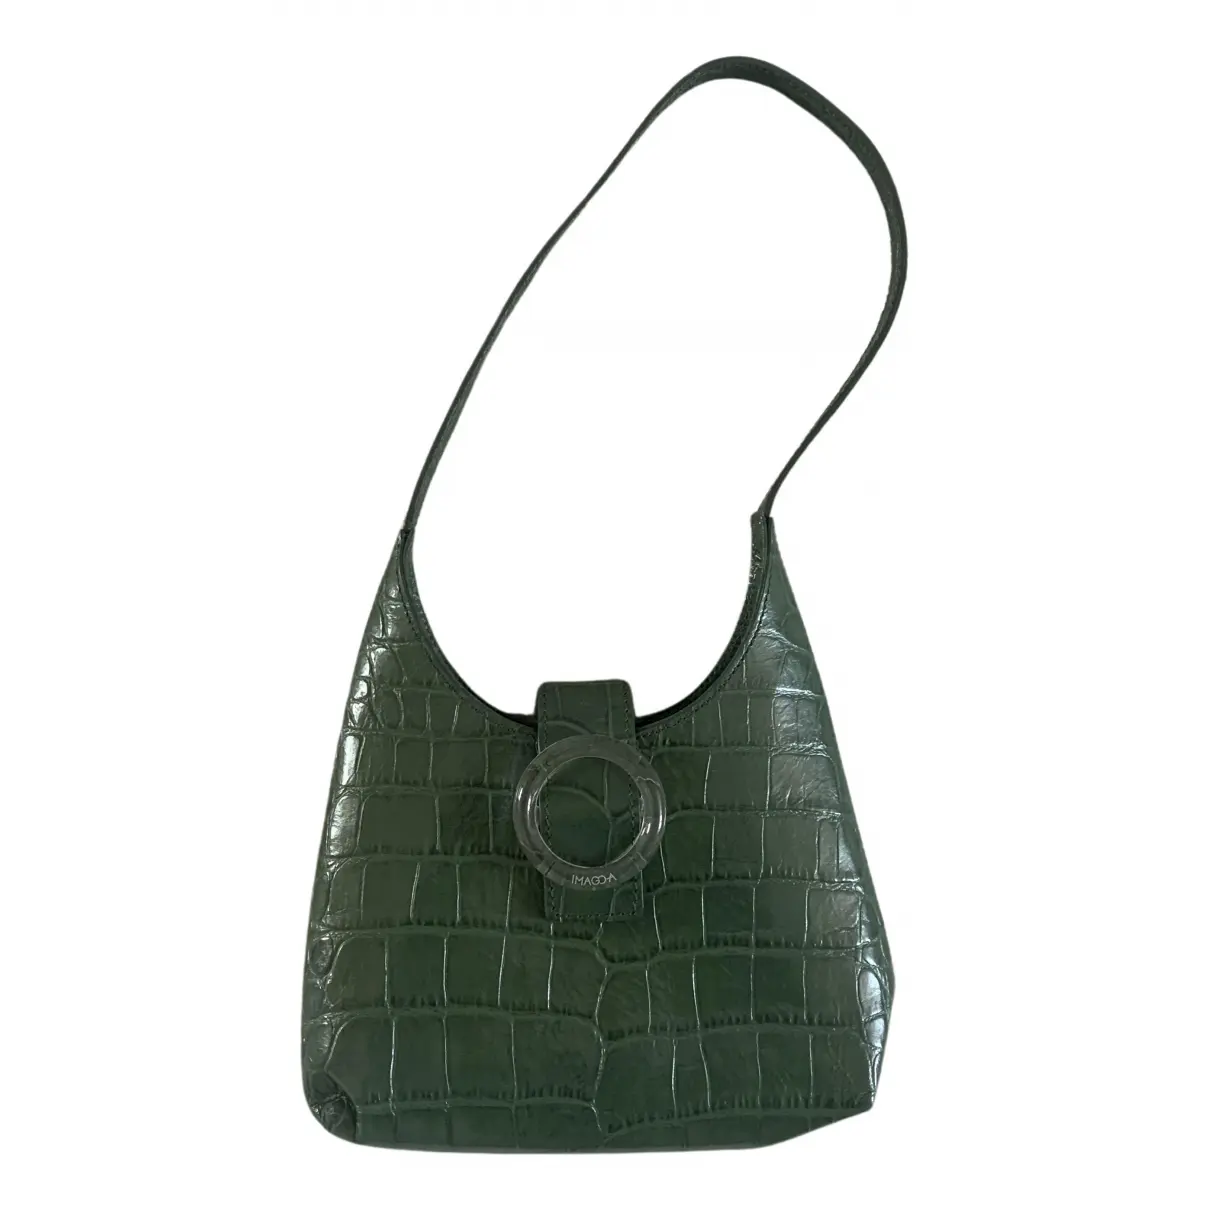 Leather handbag Imago-a